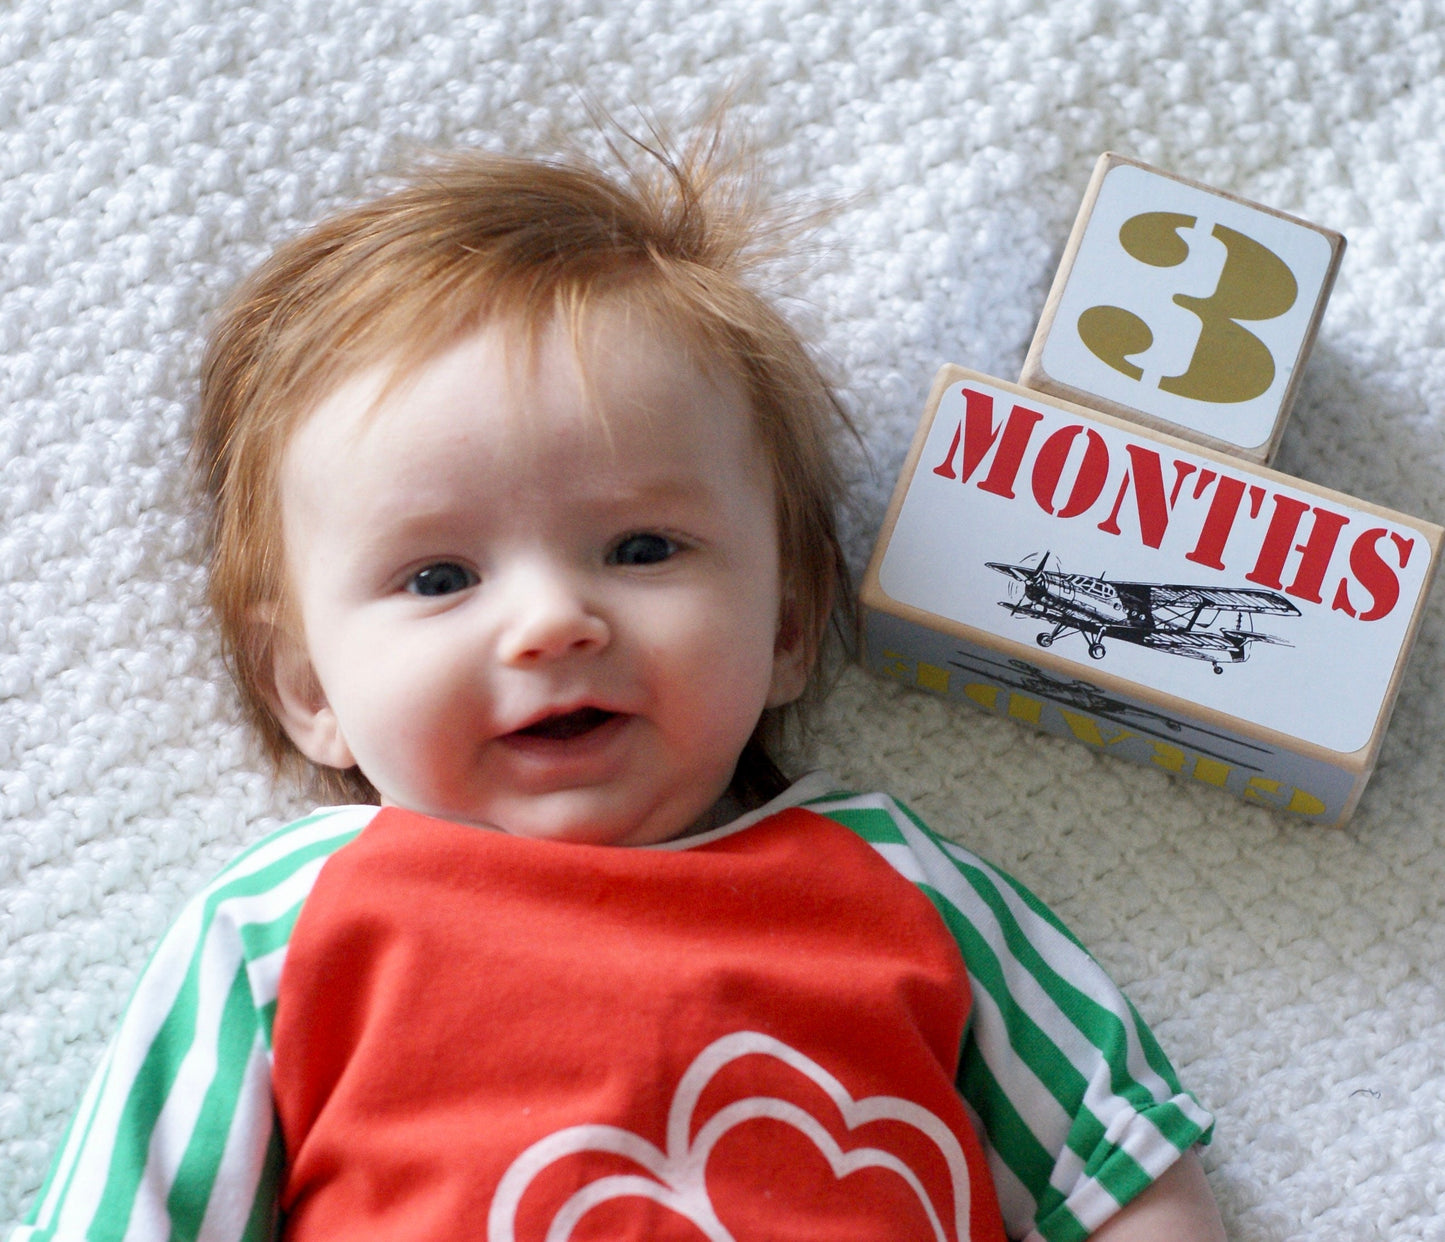 Baby Milestone Blocks -Vintage Airplanes - Stick'em Up Baby®